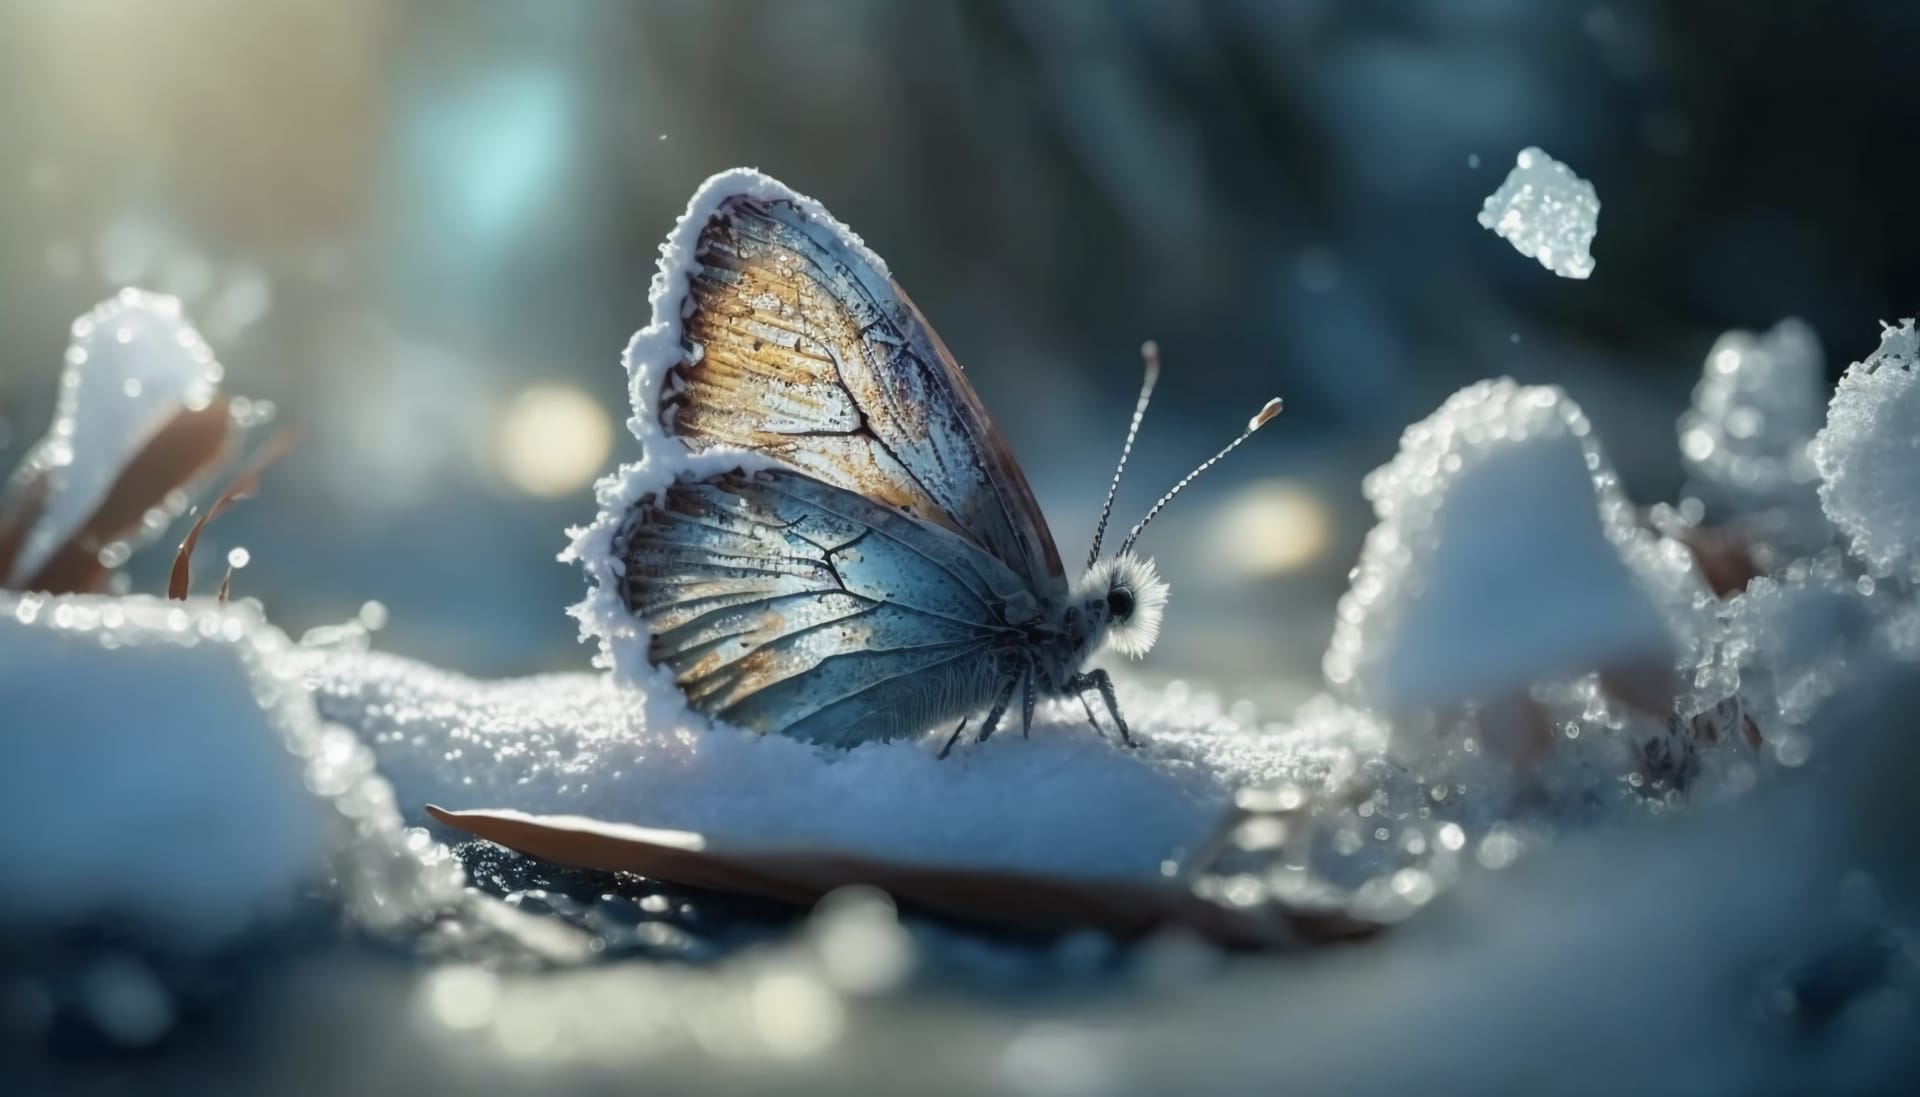 Ice snowa light blue ice butterfly falls nice image